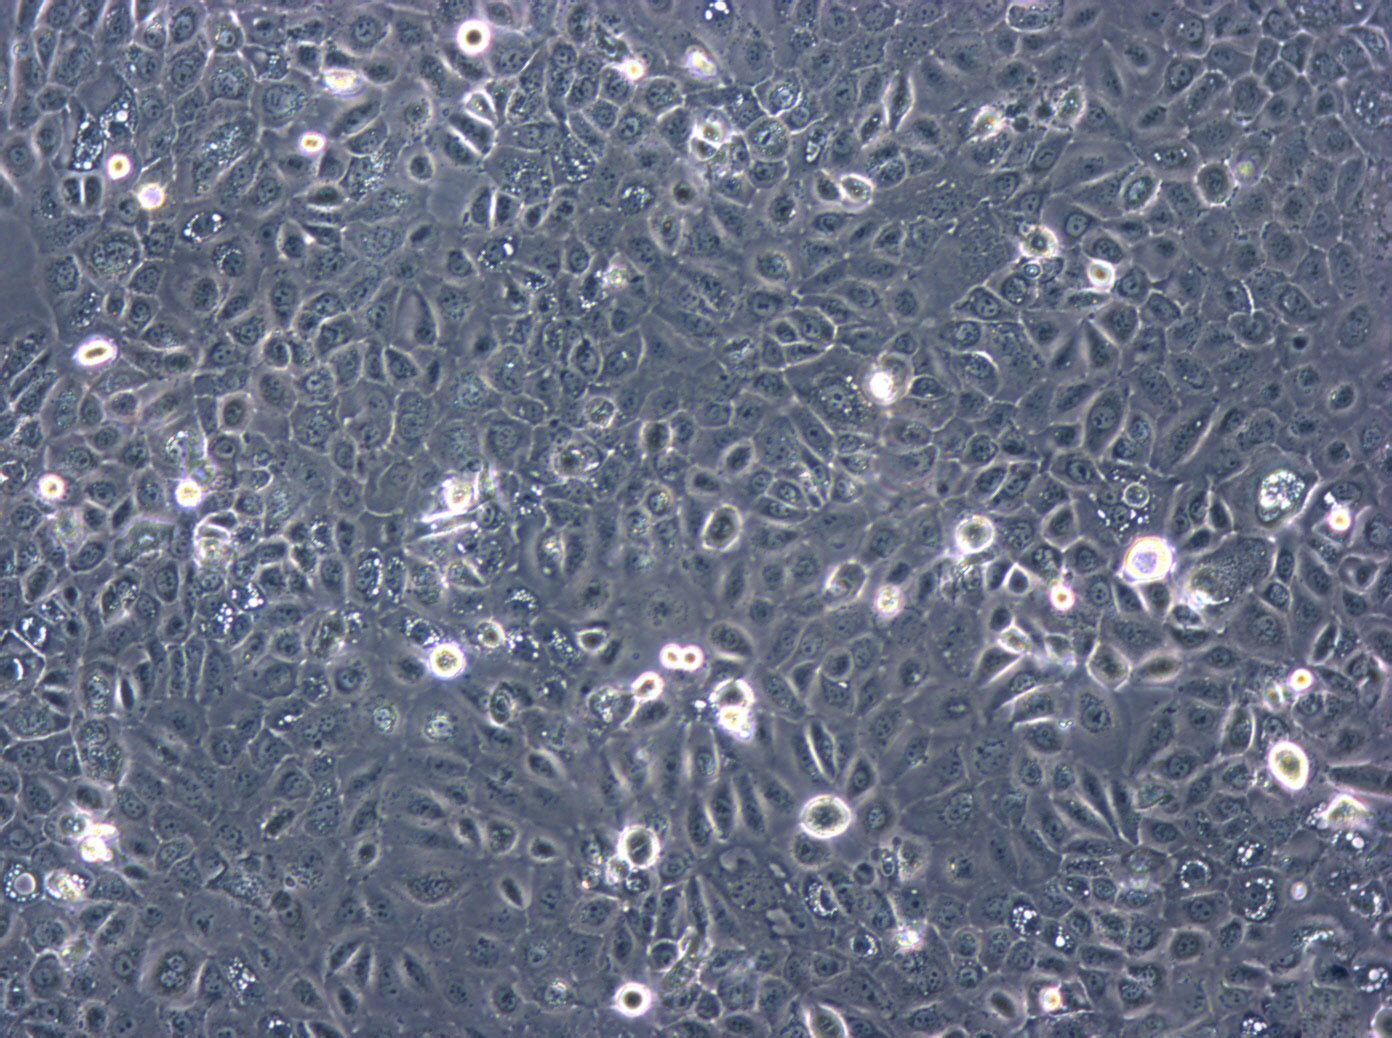 Evsa-T epithelioid cells人乳腺癌细胞系,Evsa-T epithelioid cells